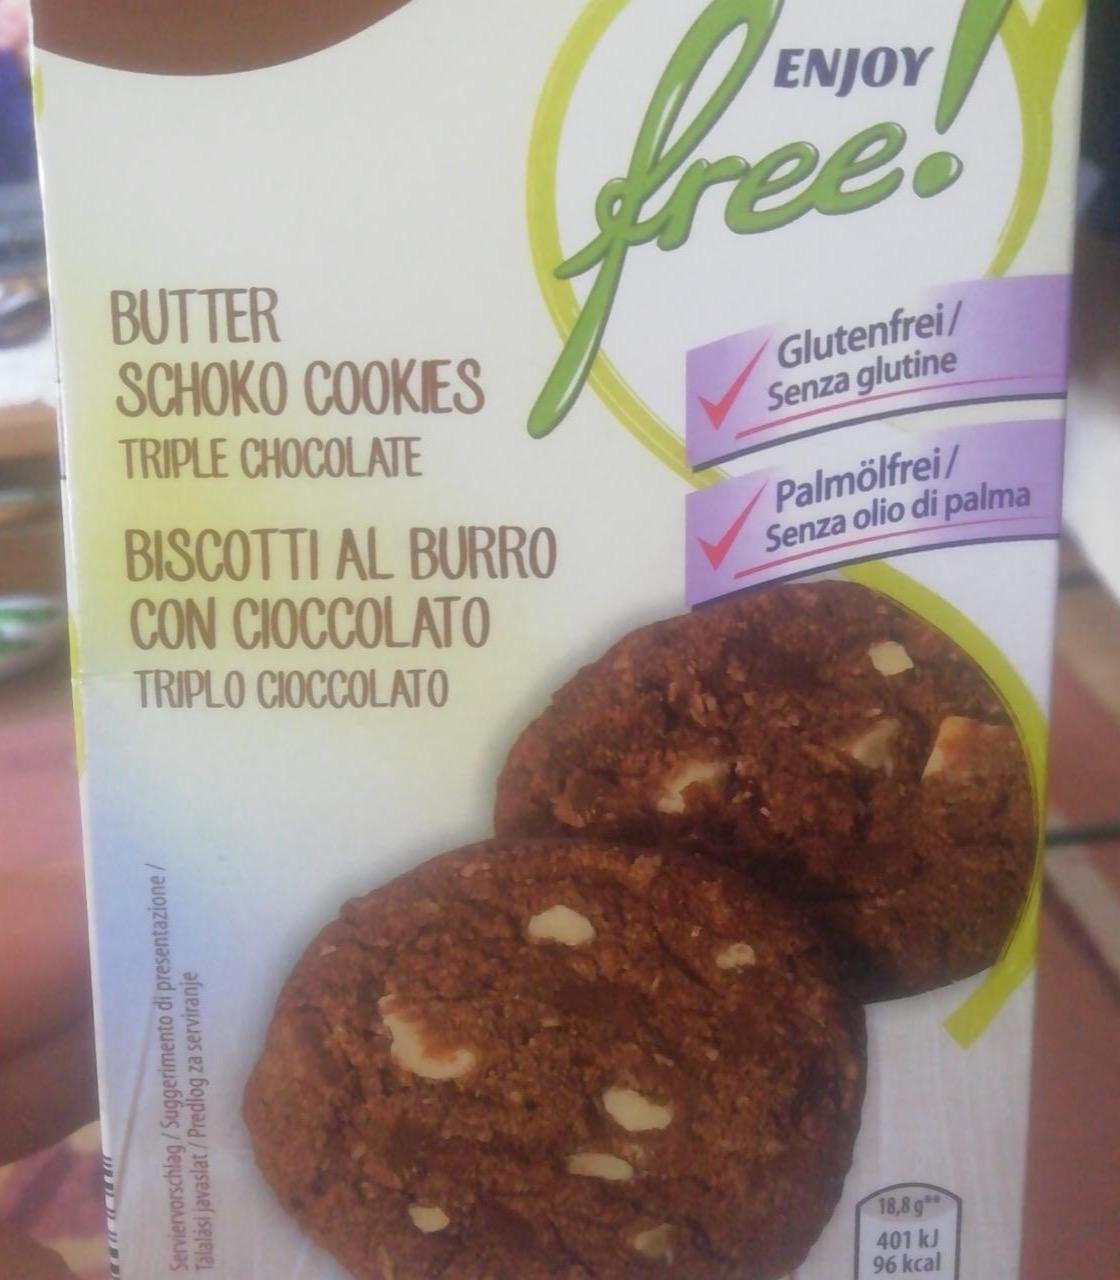 Képek - Butter schoko cookies Triple chocolate Enjoy free!